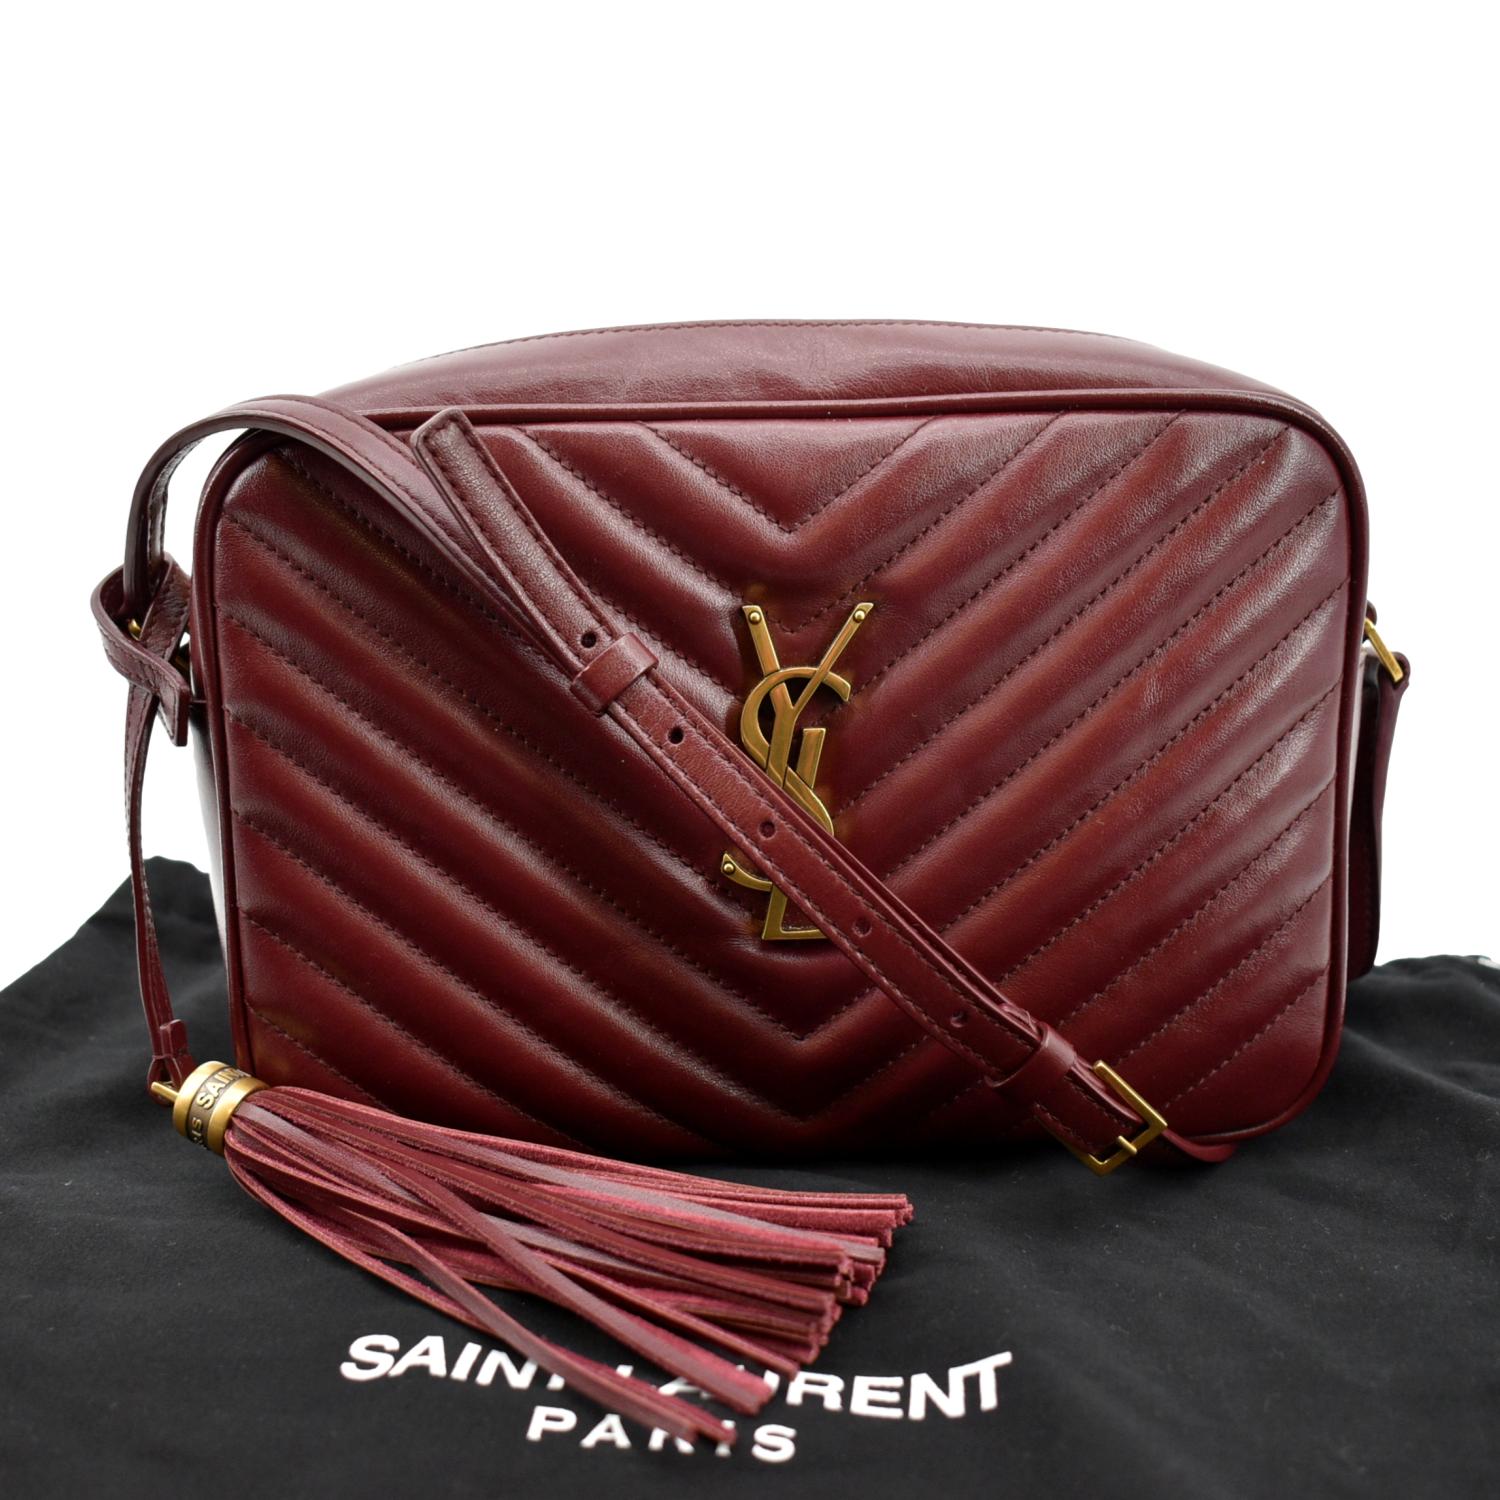 Handbag for rent Yves Saint Laurent - Rent Fashion Bag